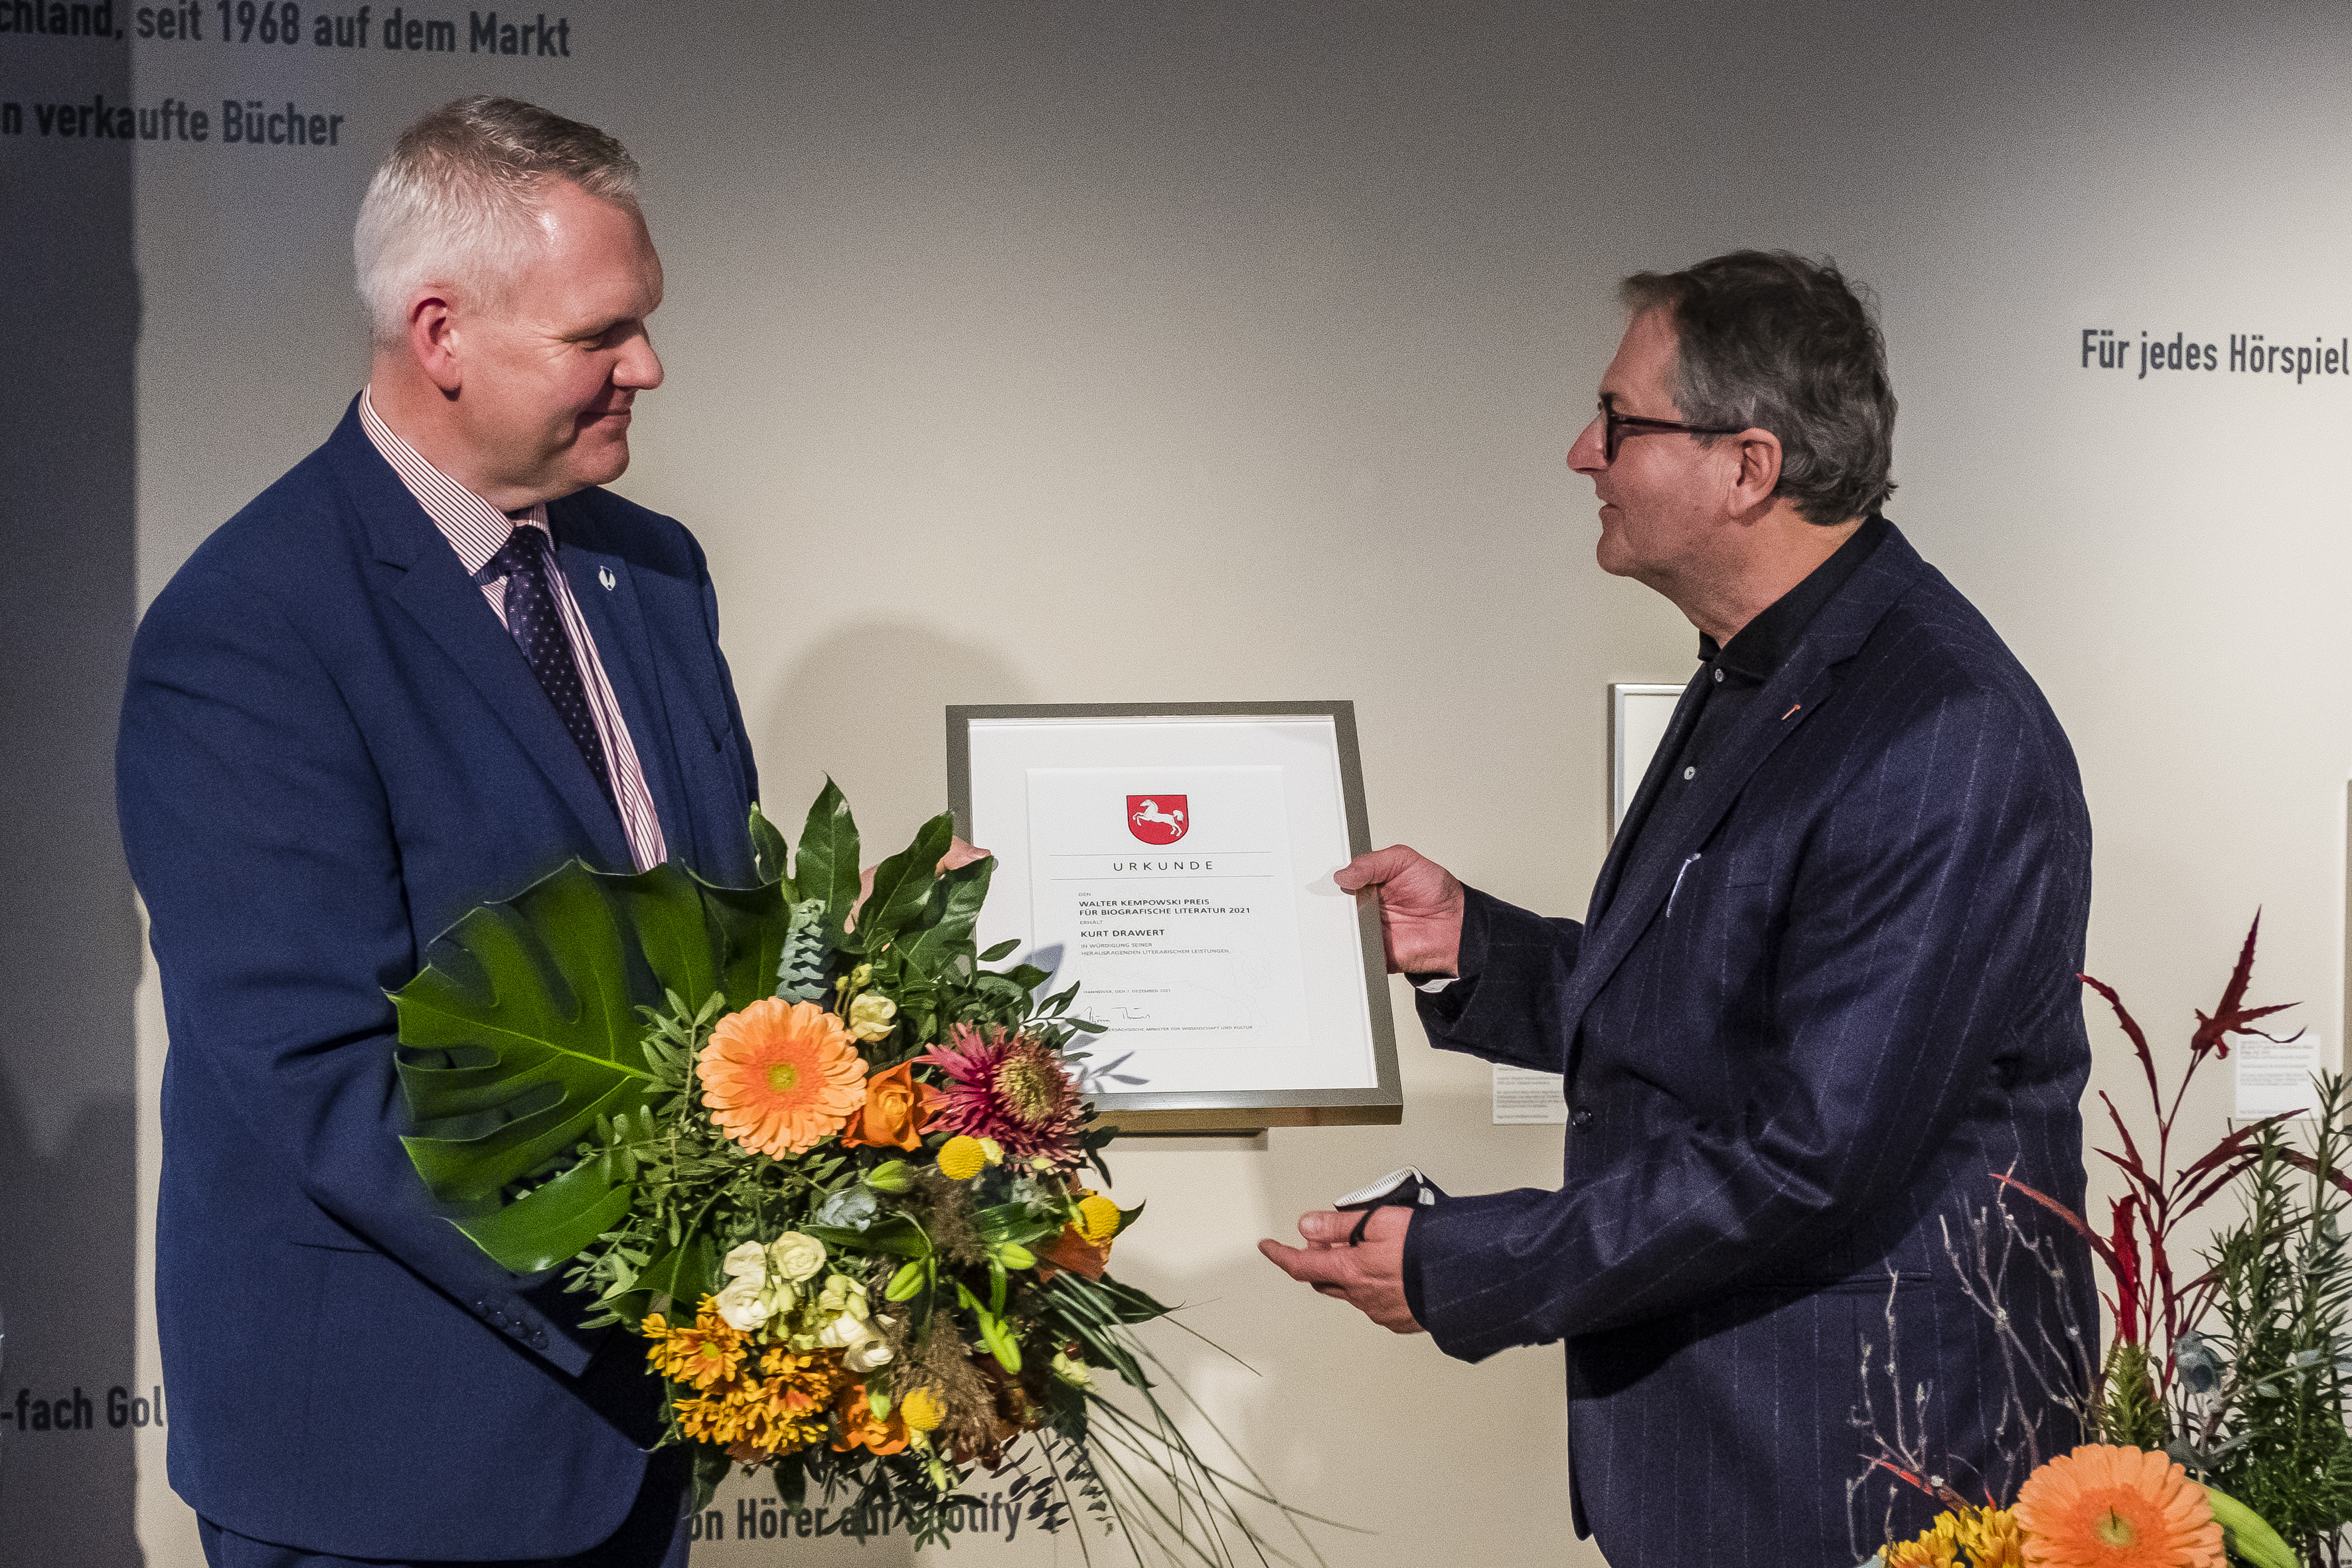 Walter Kempowski Preis für biografische Literatur 2021: Kulturminister Björn Thümler mit dem Preisträger Kurt Drawert.